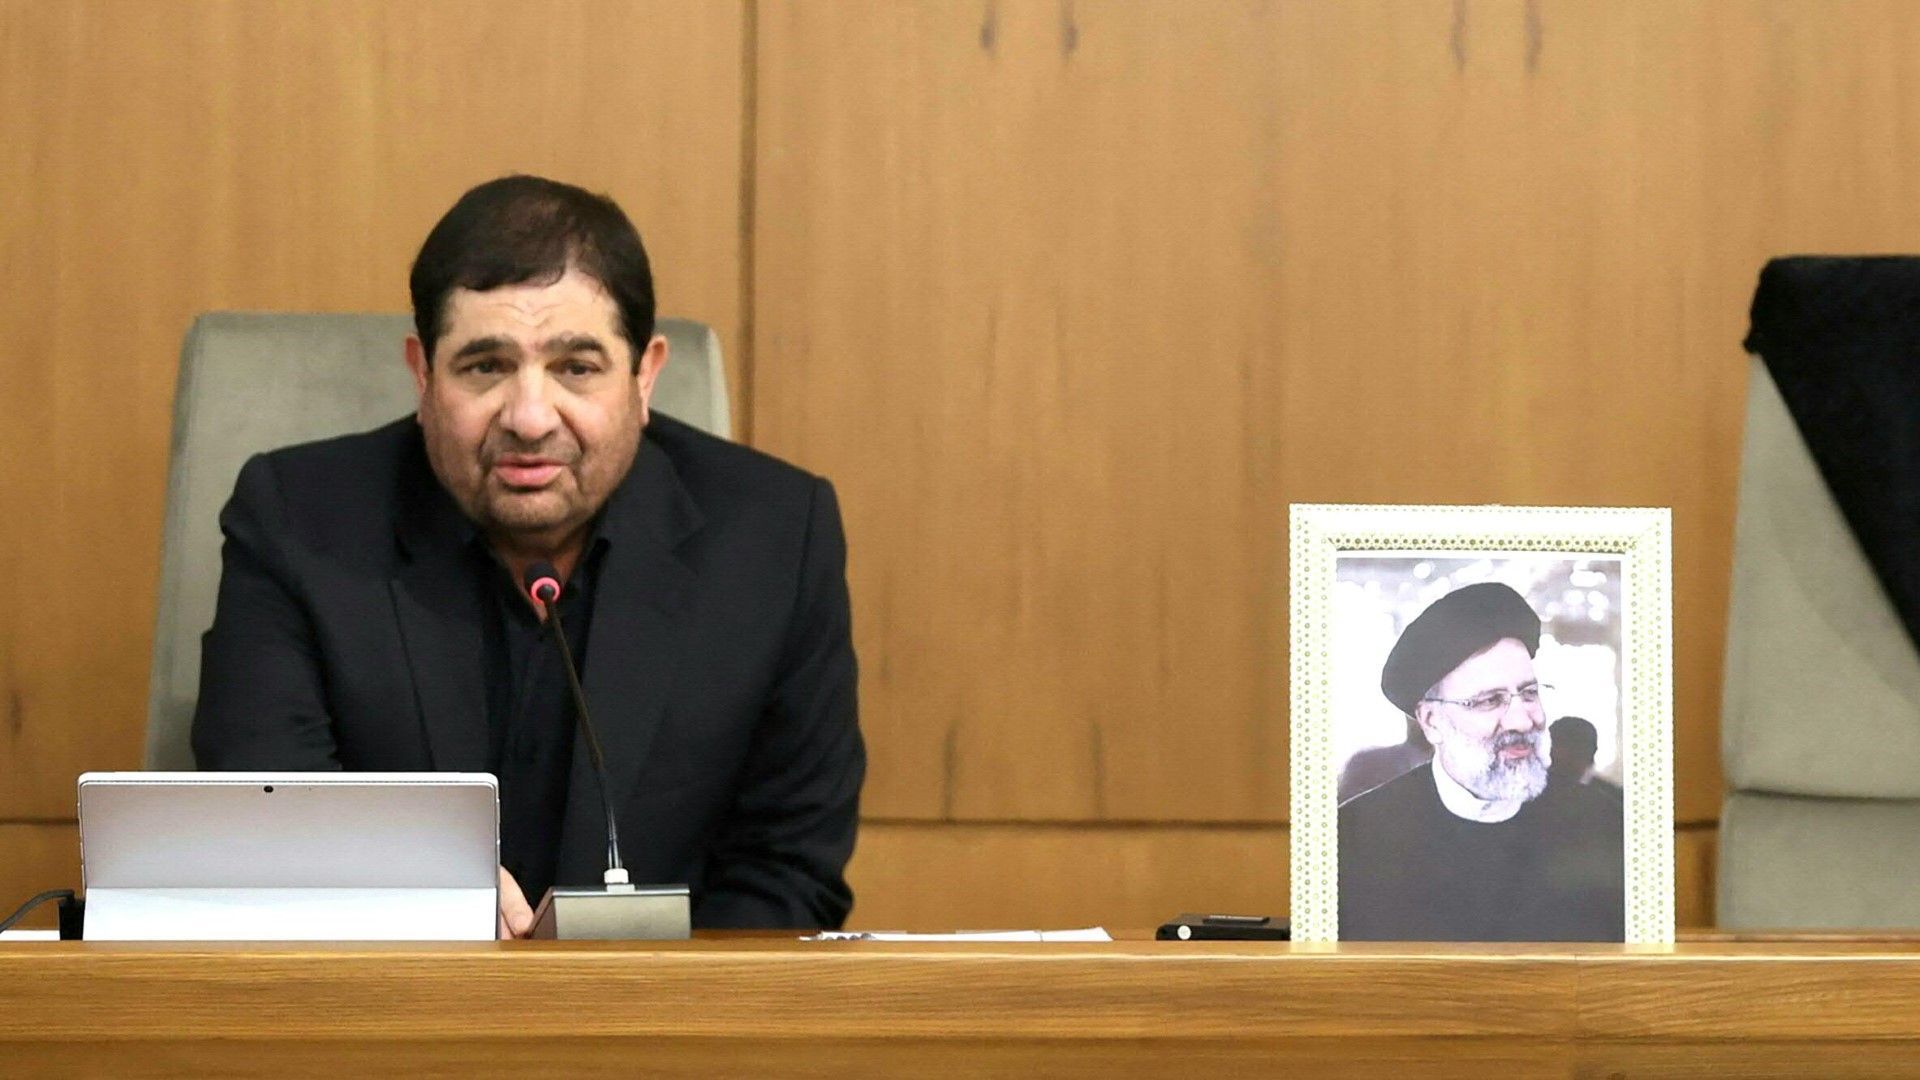 Iran: Interimspräsident Mochber betont Kontinuität